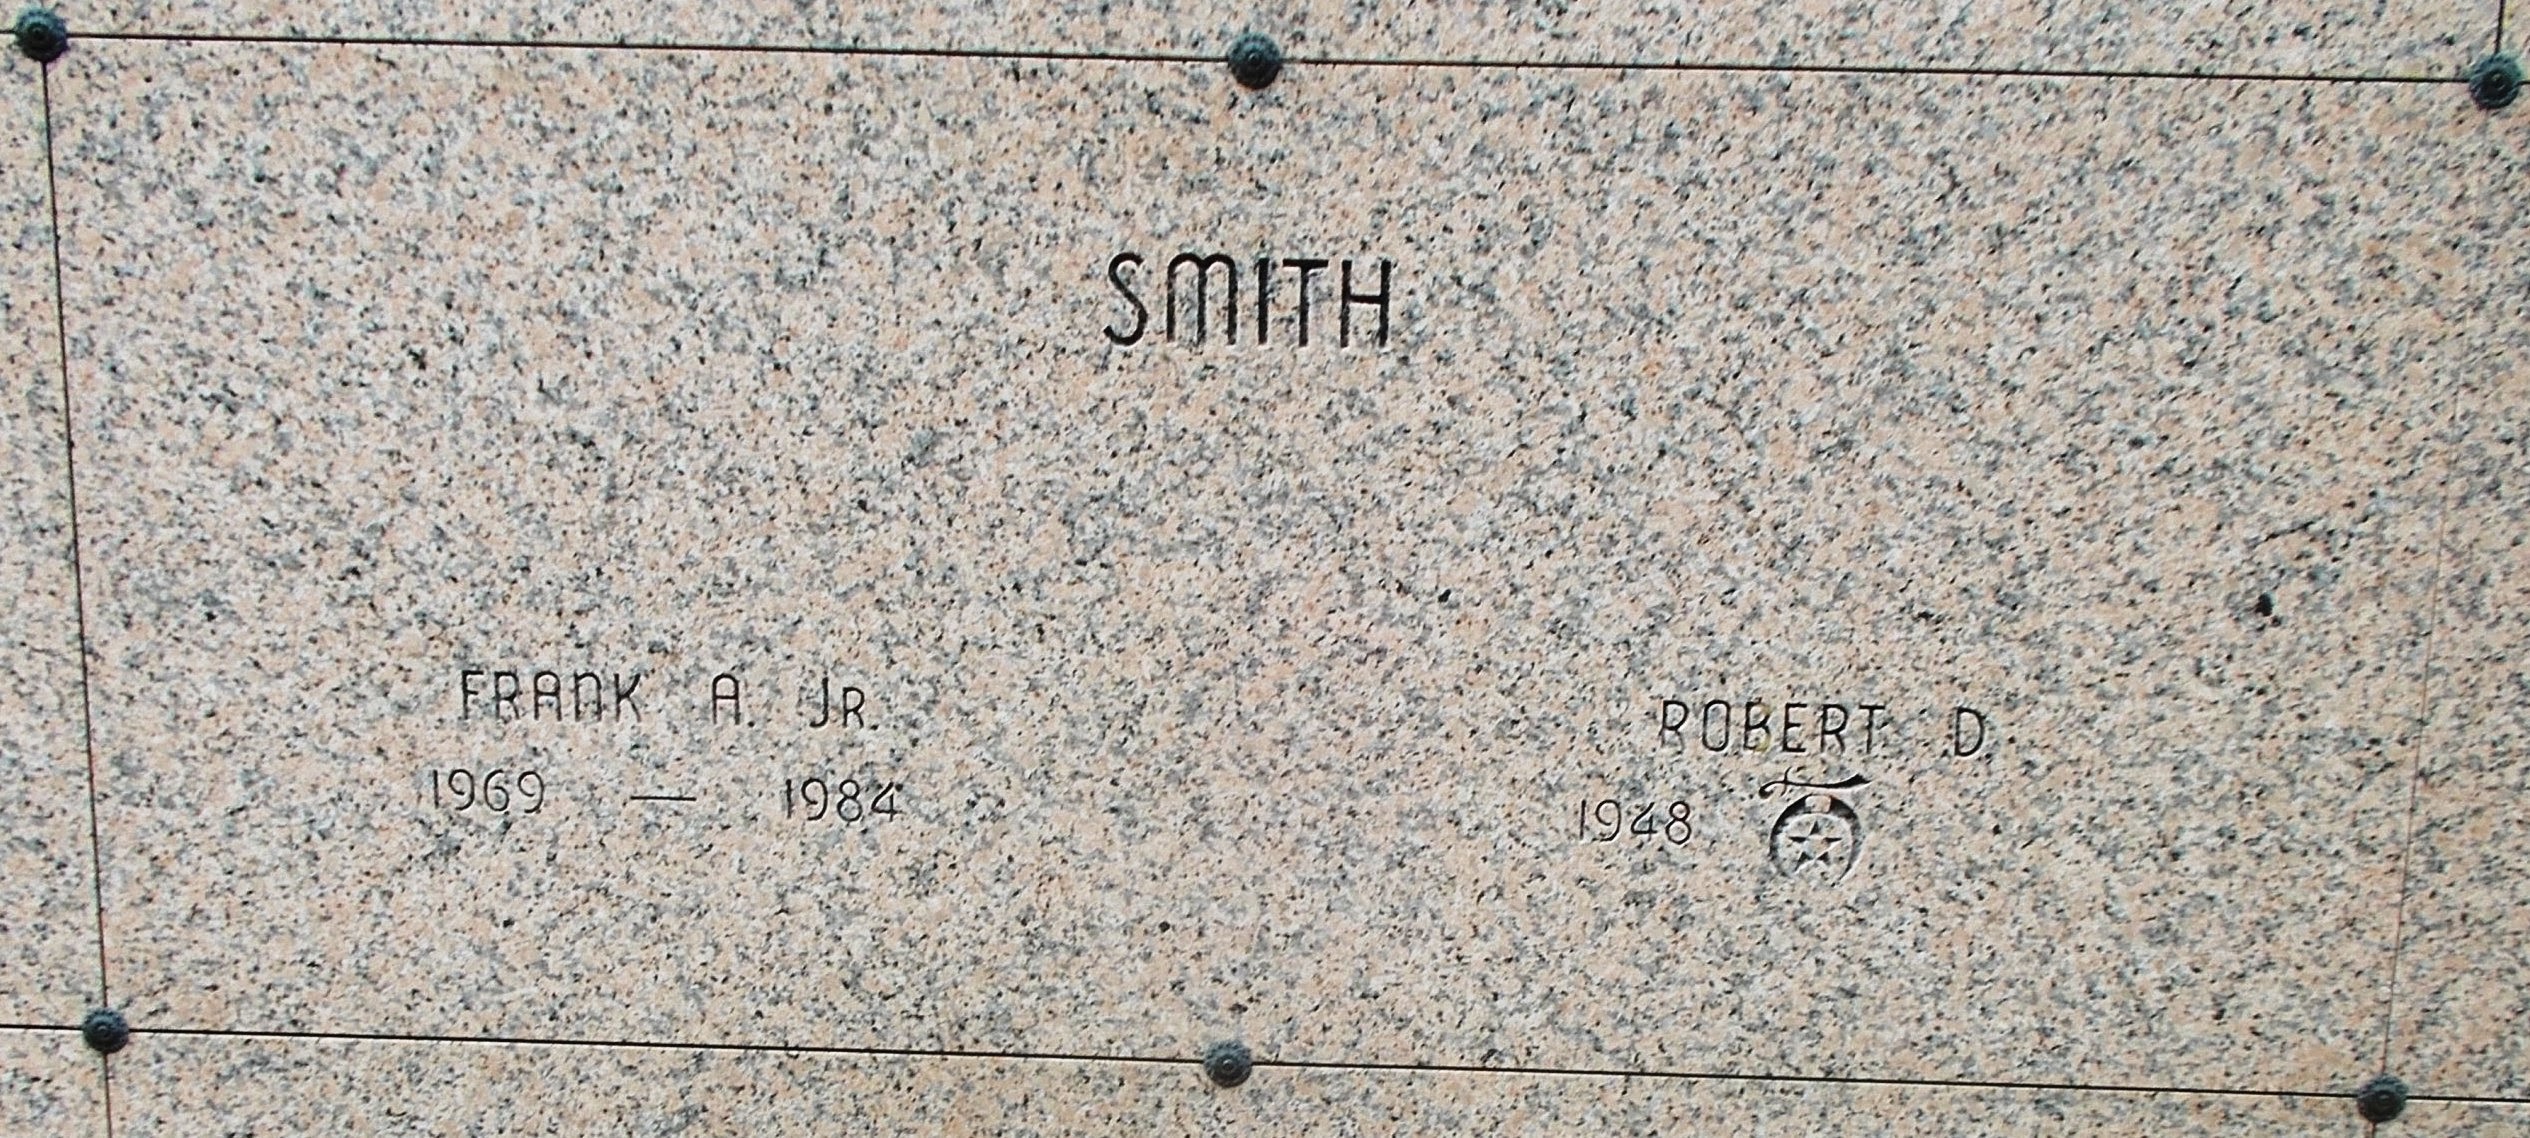 Frank A Smith, Jr